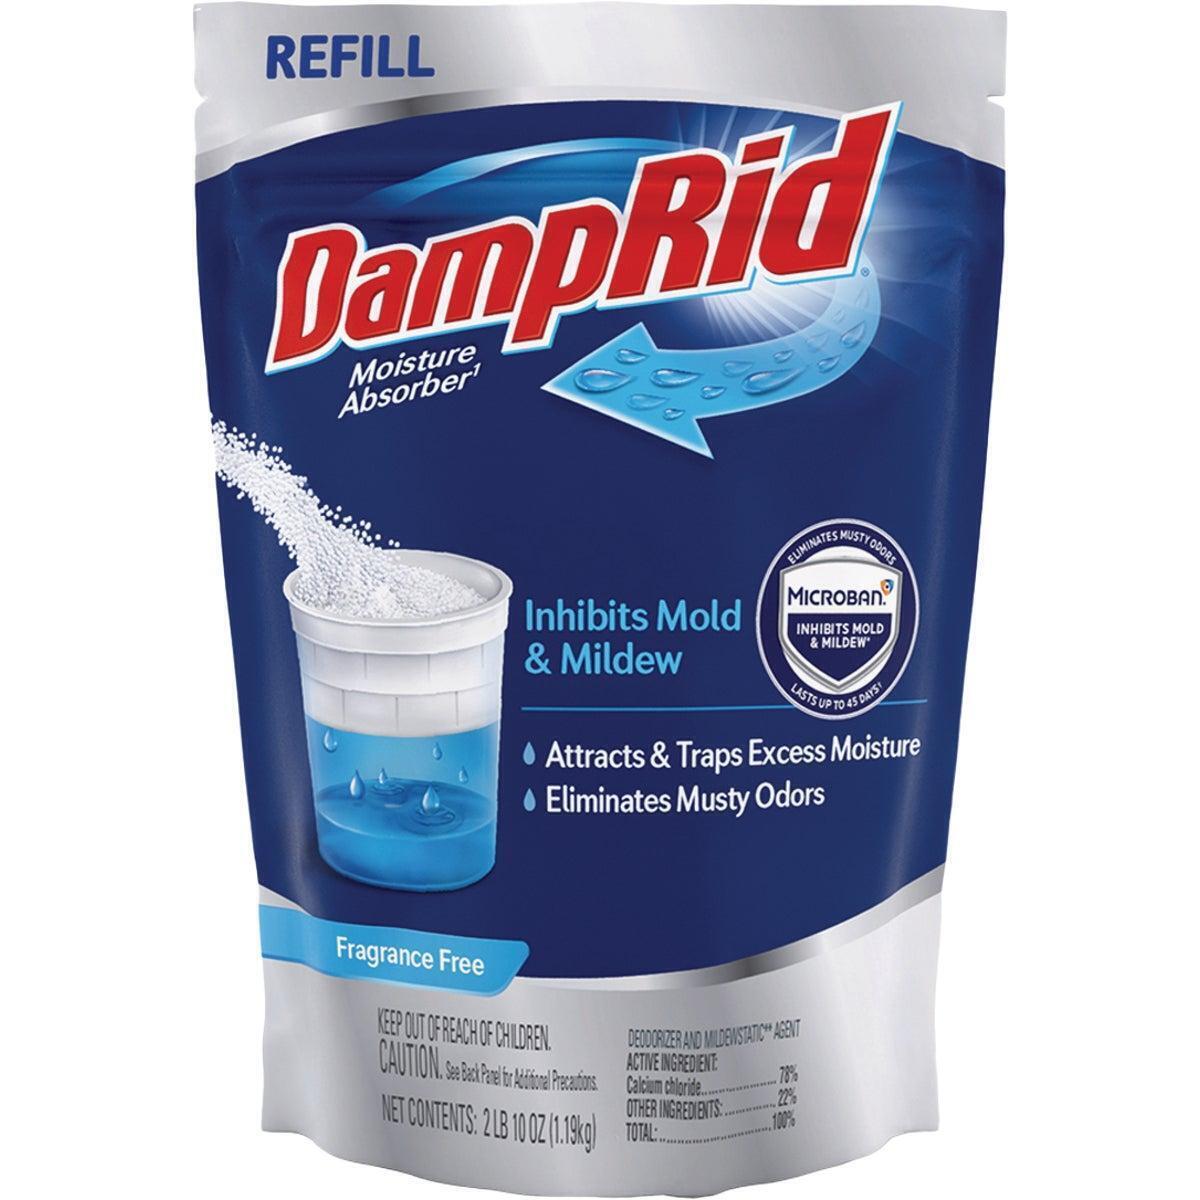 DampRid 42 Oz. Fragrance Free Moisture Absorber Refill with Microban FG30FFESB